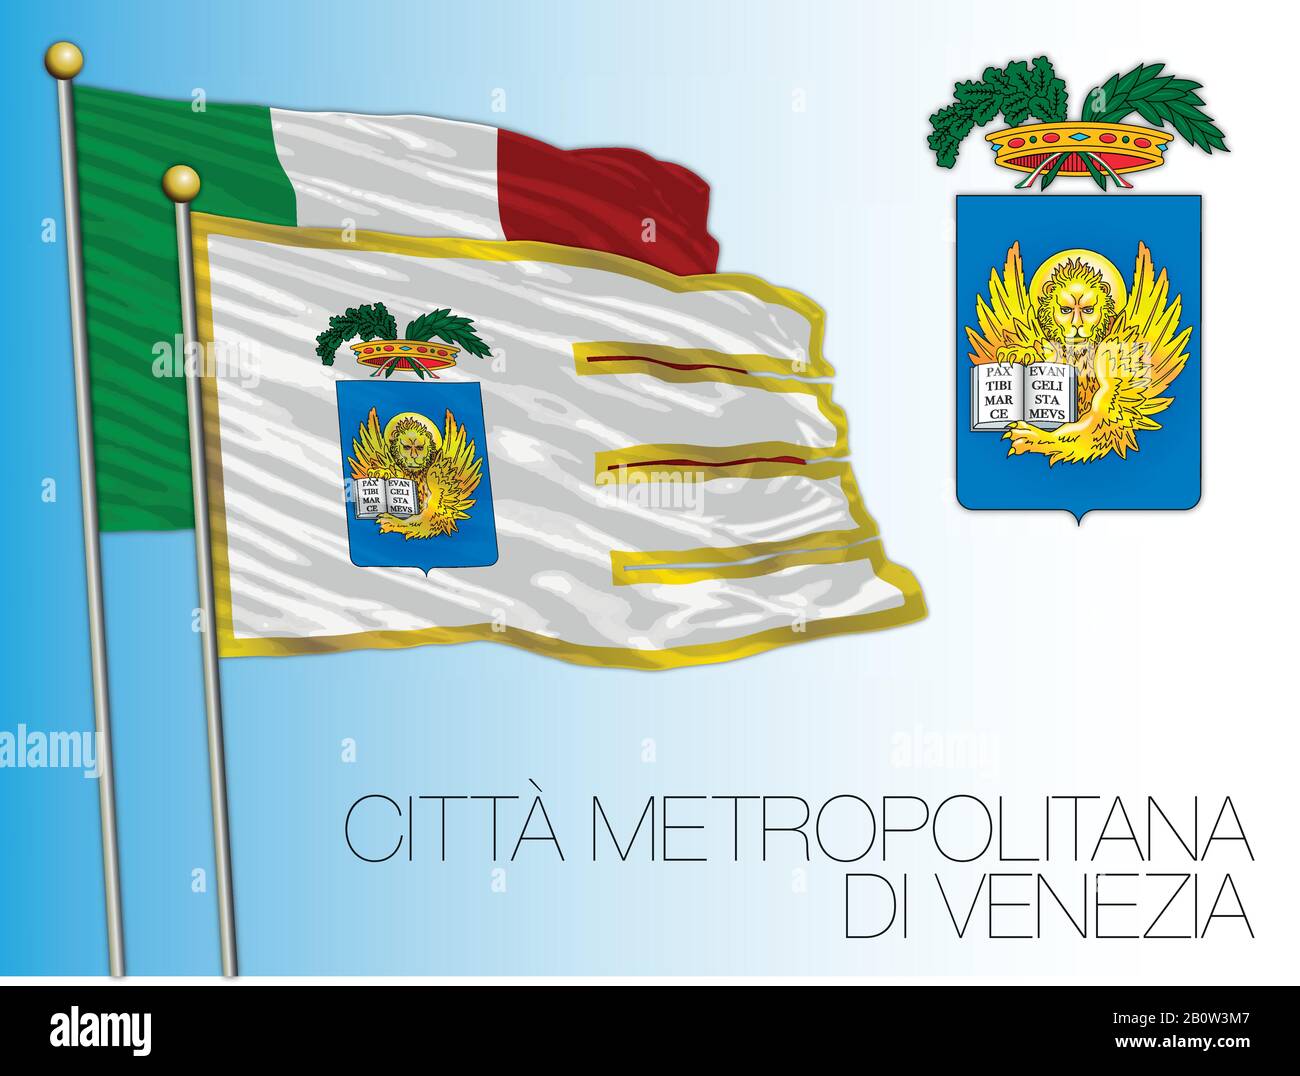 Citta Metropolitana di Venezia, Metropolitan City of Venice, flag and coat of arms, Veneto region, Italy, vector illustration Stock Vector